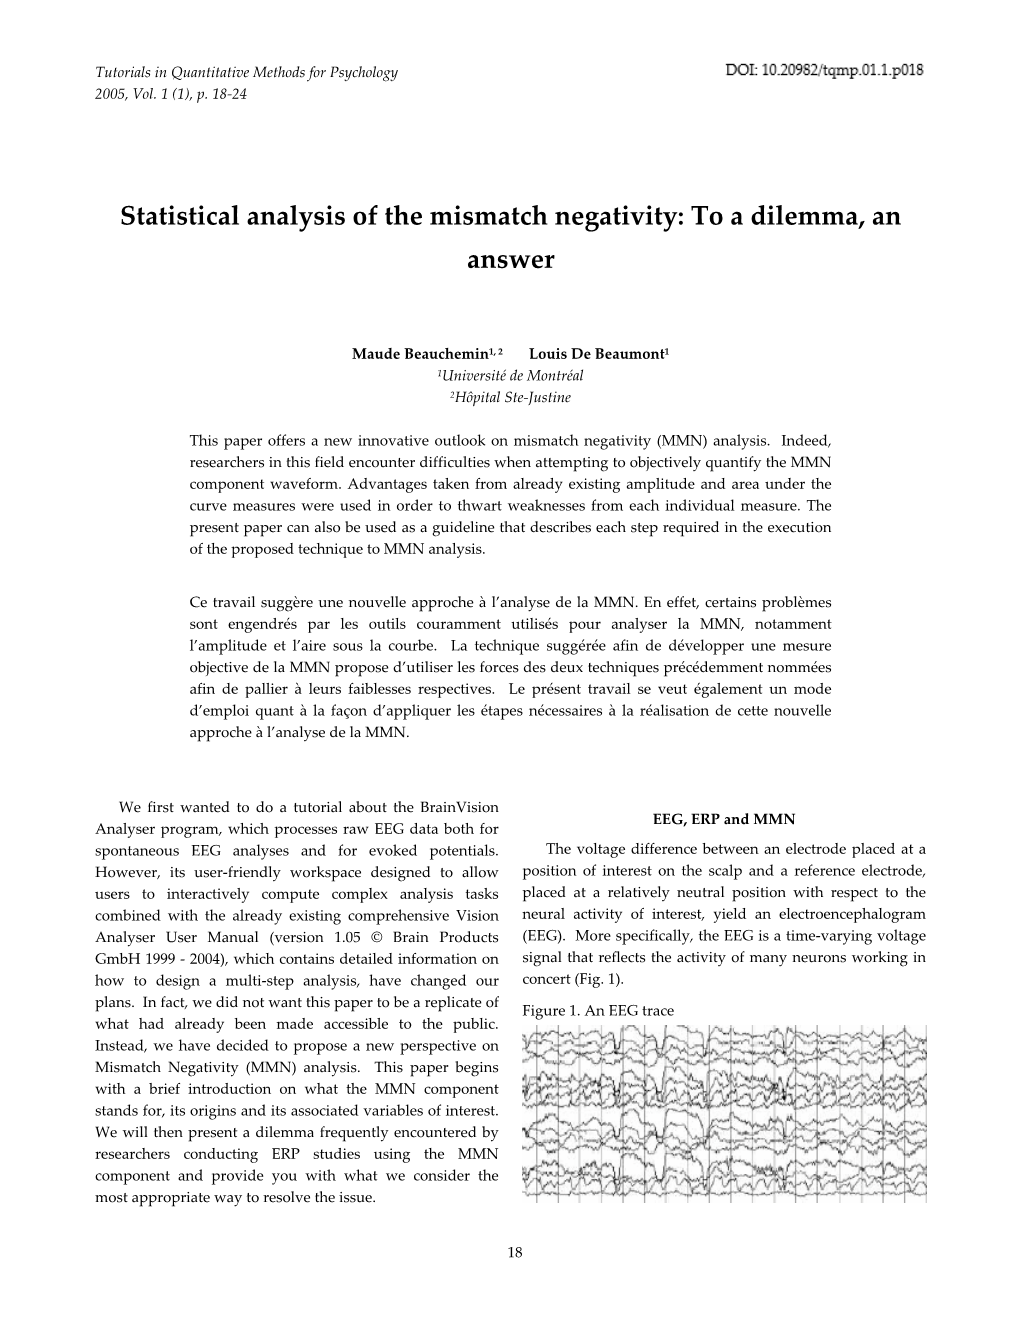 Statistical Analysis of the Mismatch Negativity: to a Dilemma, an Answer